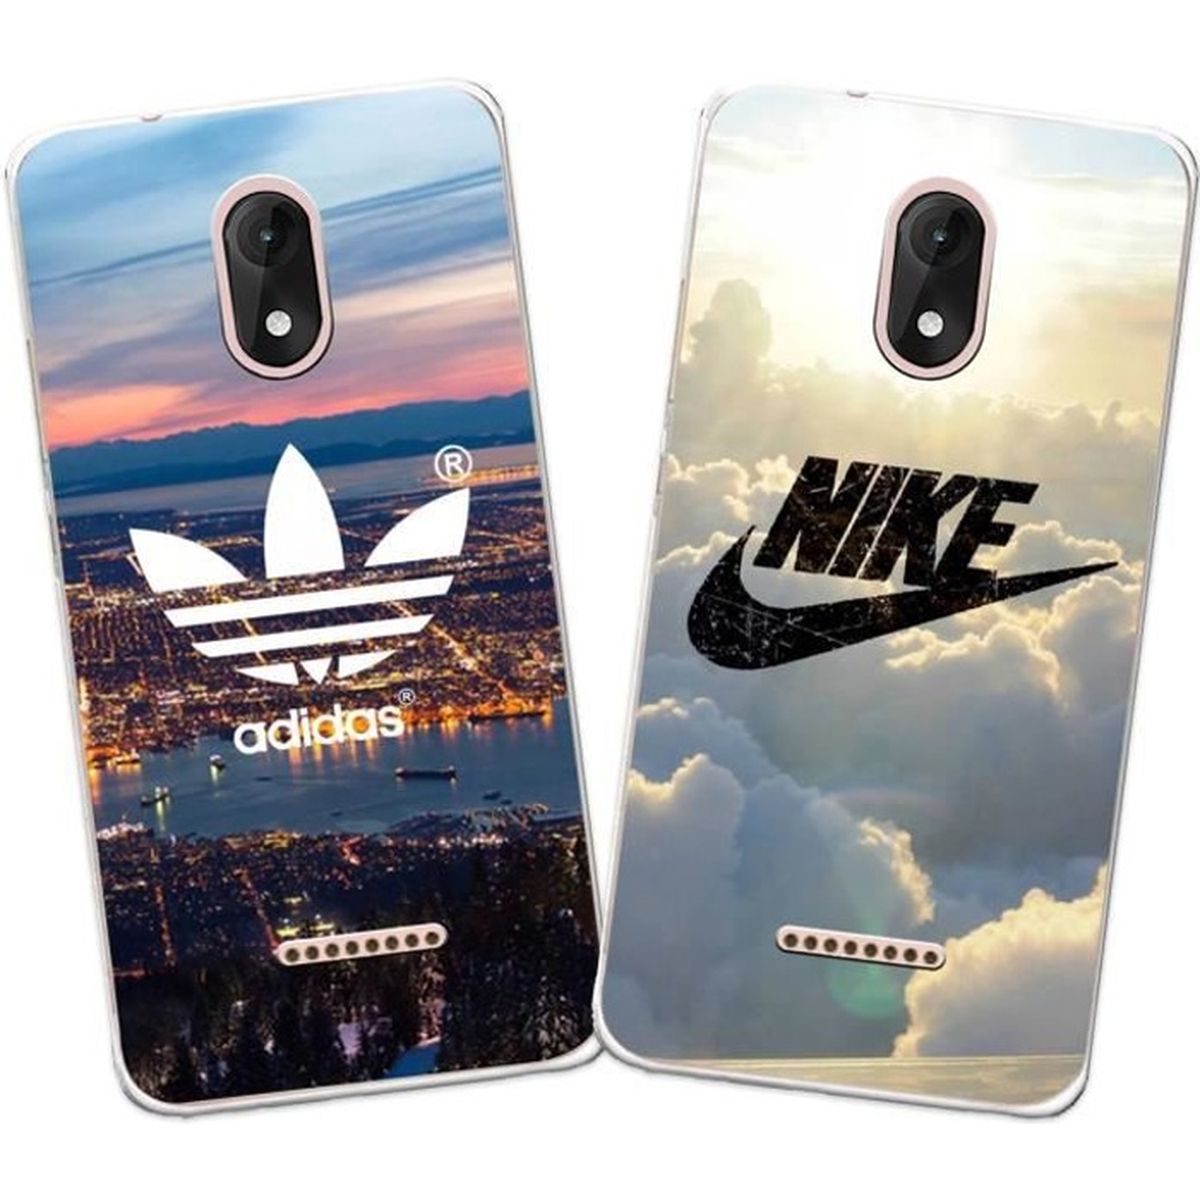 2 X Coque Samsung Galaxy S9 Nike et Adidas Doux Souple TPU Silicone Housse Étui Pour Samsung Galaxy S9